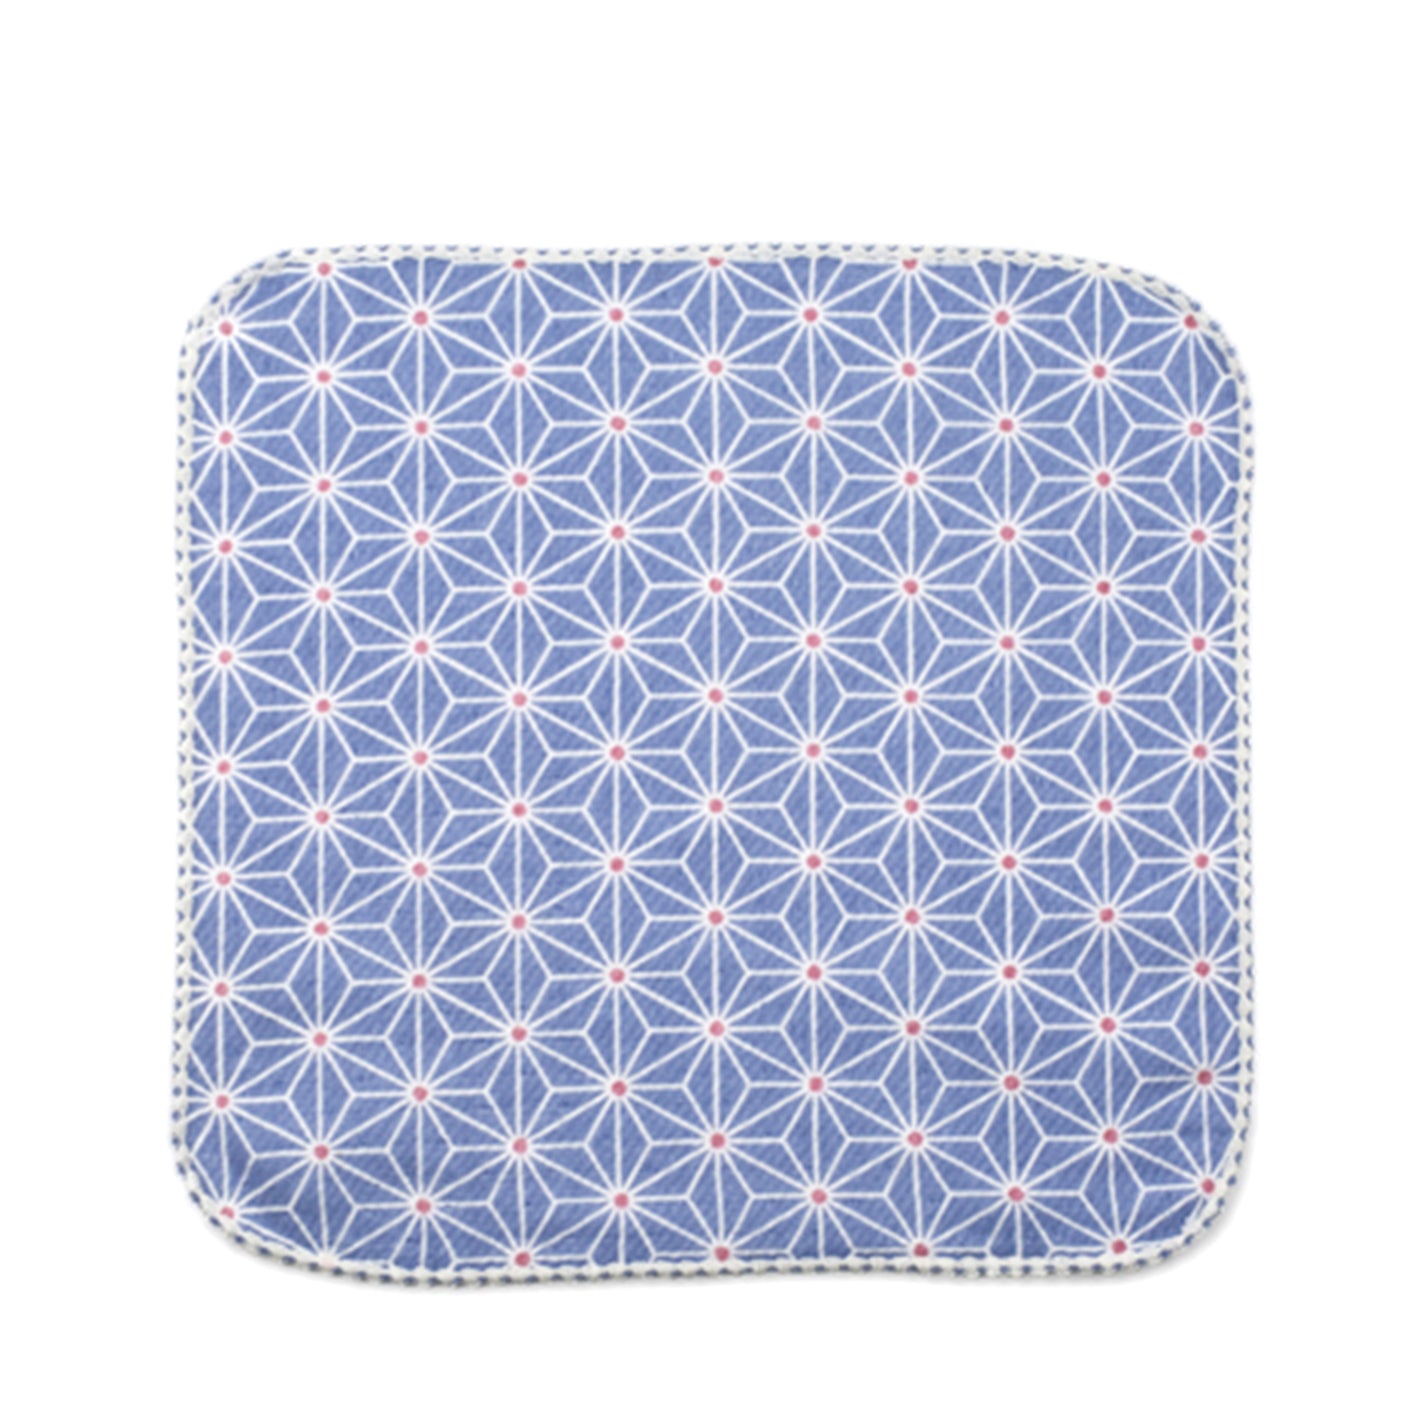 Kontex Haikara Handkerchief - Asanoha Blue